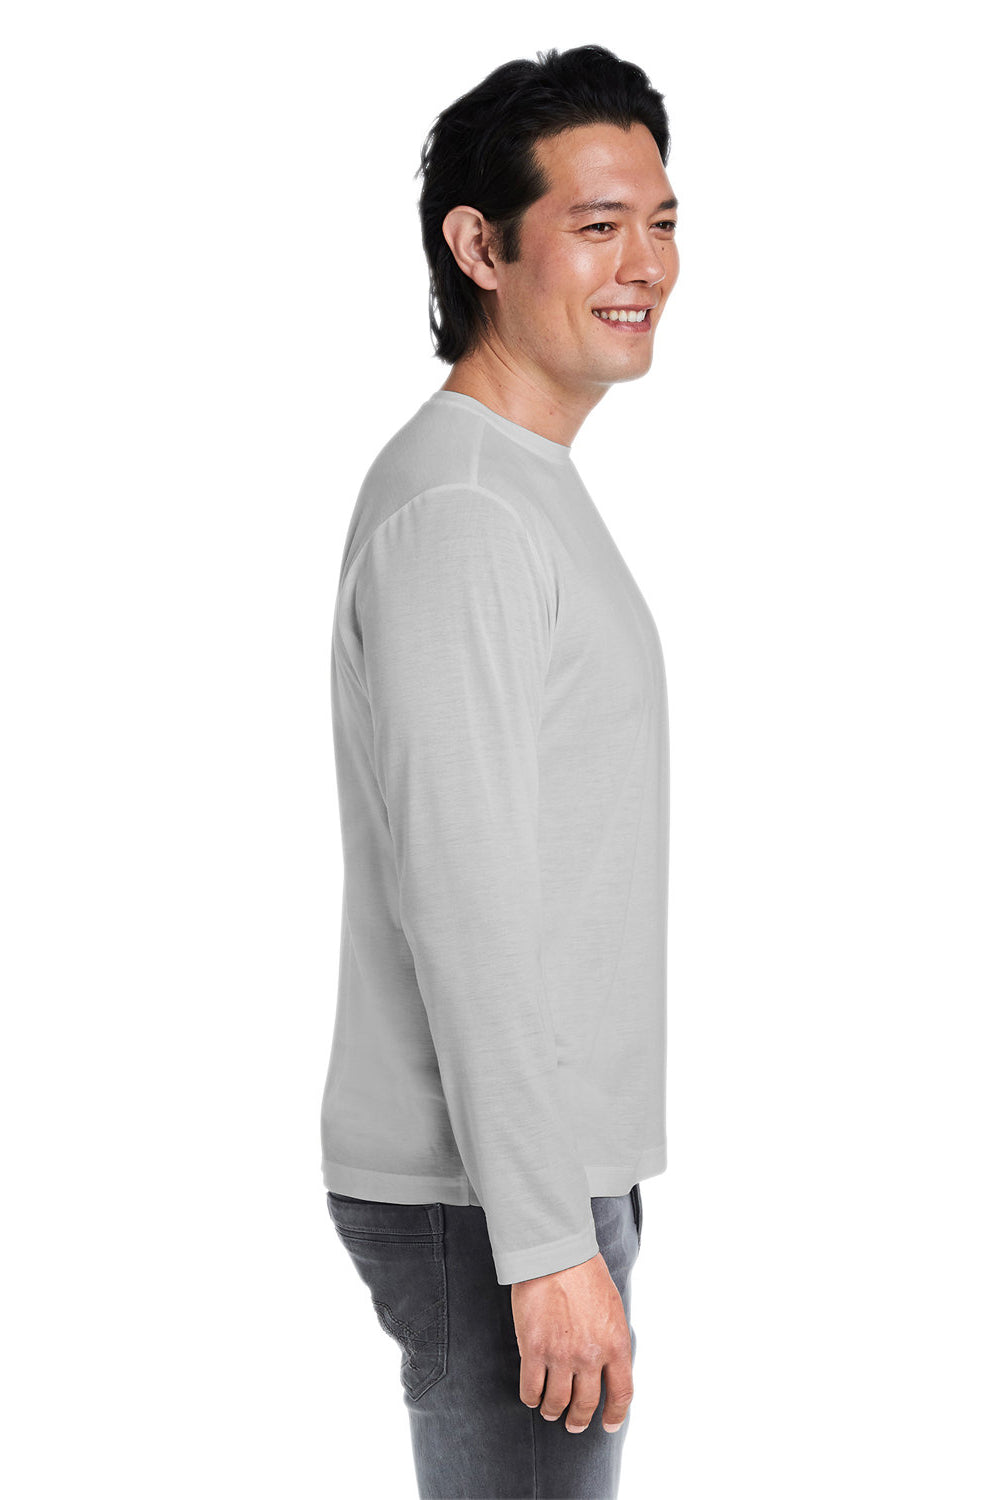 Core 365 CE111L Mens Fusion ChromaSoft Performance Moisture Wicking Long Sleeve Crewneck T-Shirt Platinum Grey Side